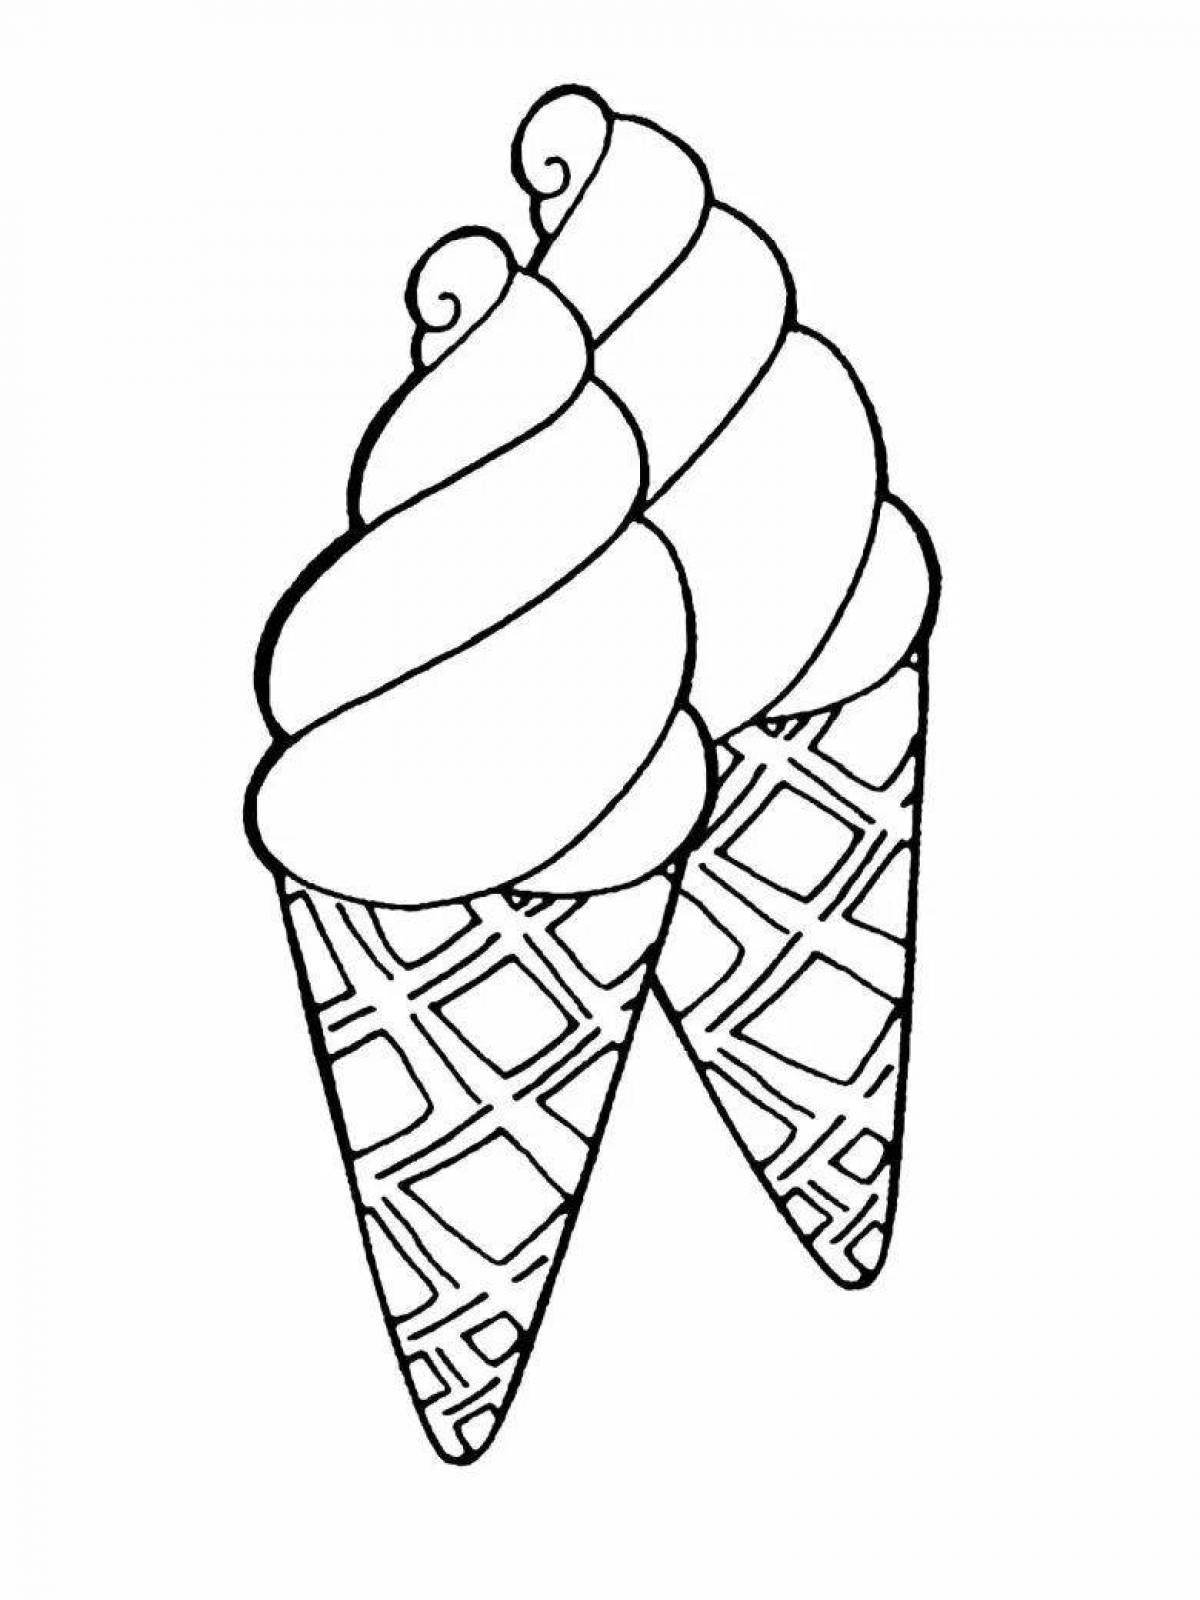 Charming ice cream drawing